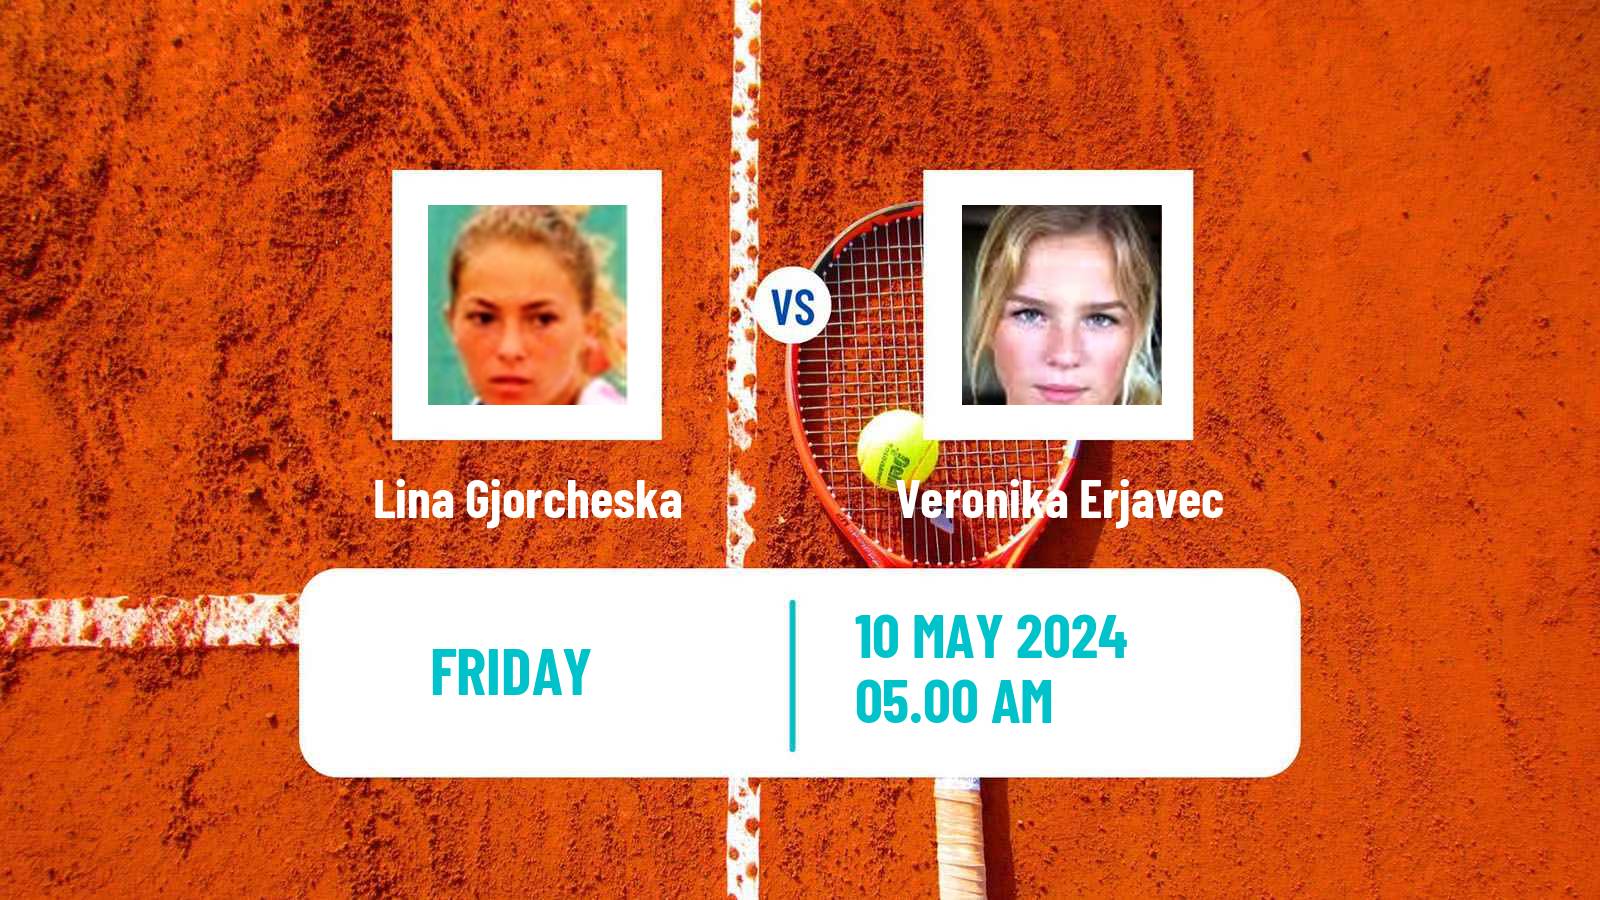 Tennis ITF W75 Trnava 2 Women Lina Gjorcheska - Veronika Erjavec